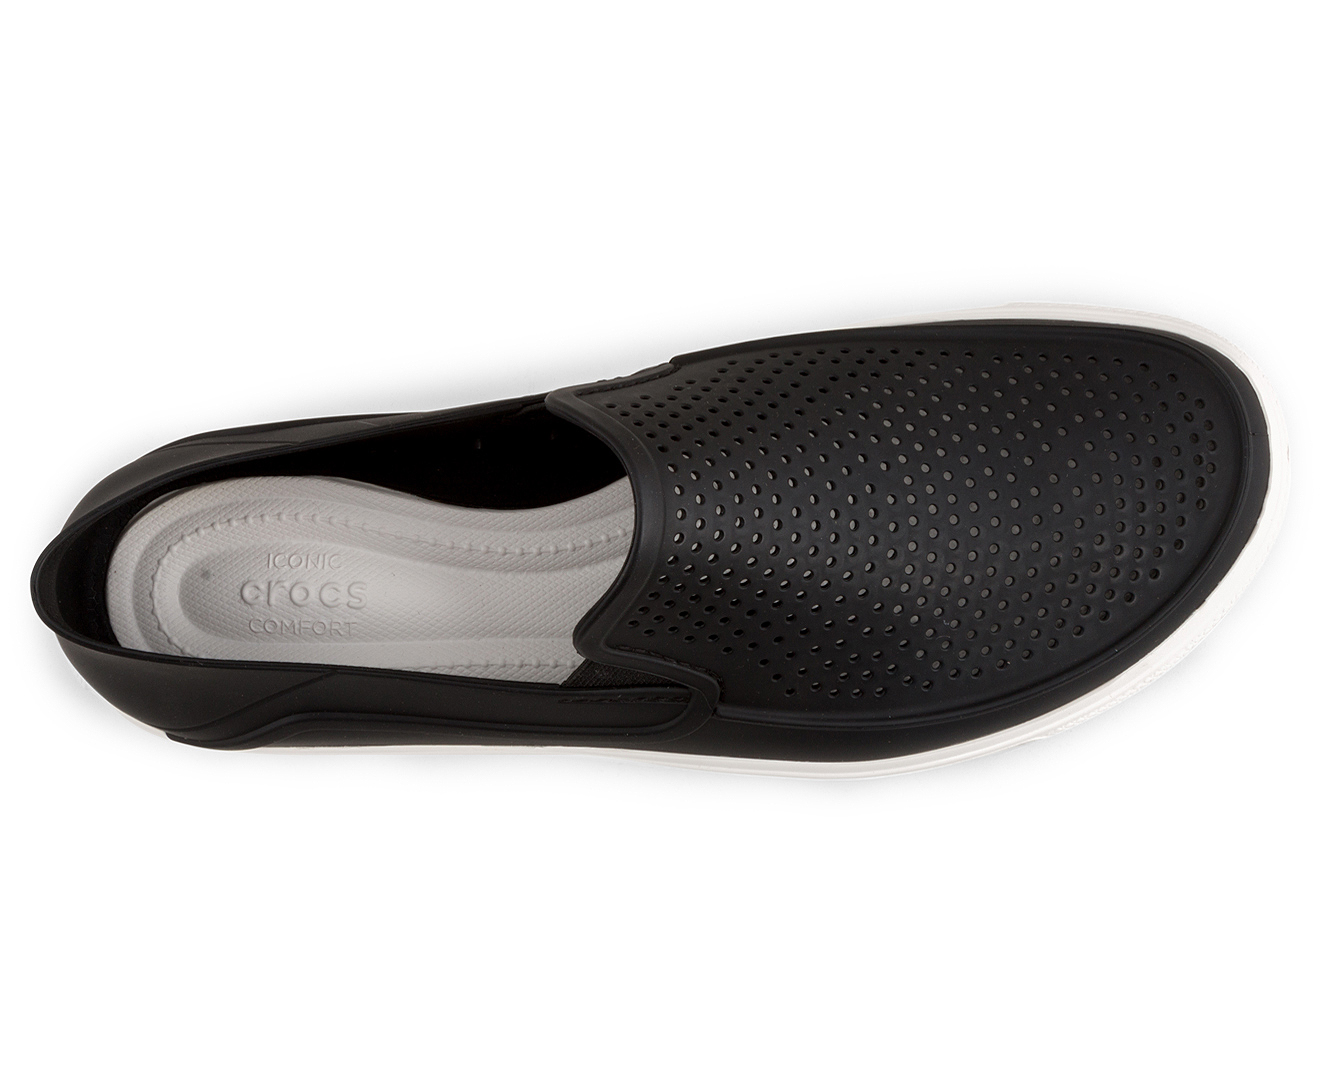 Crocs Men's CitiLane Roka Slip-On Shoe - Black/White | Scoopon Shopping